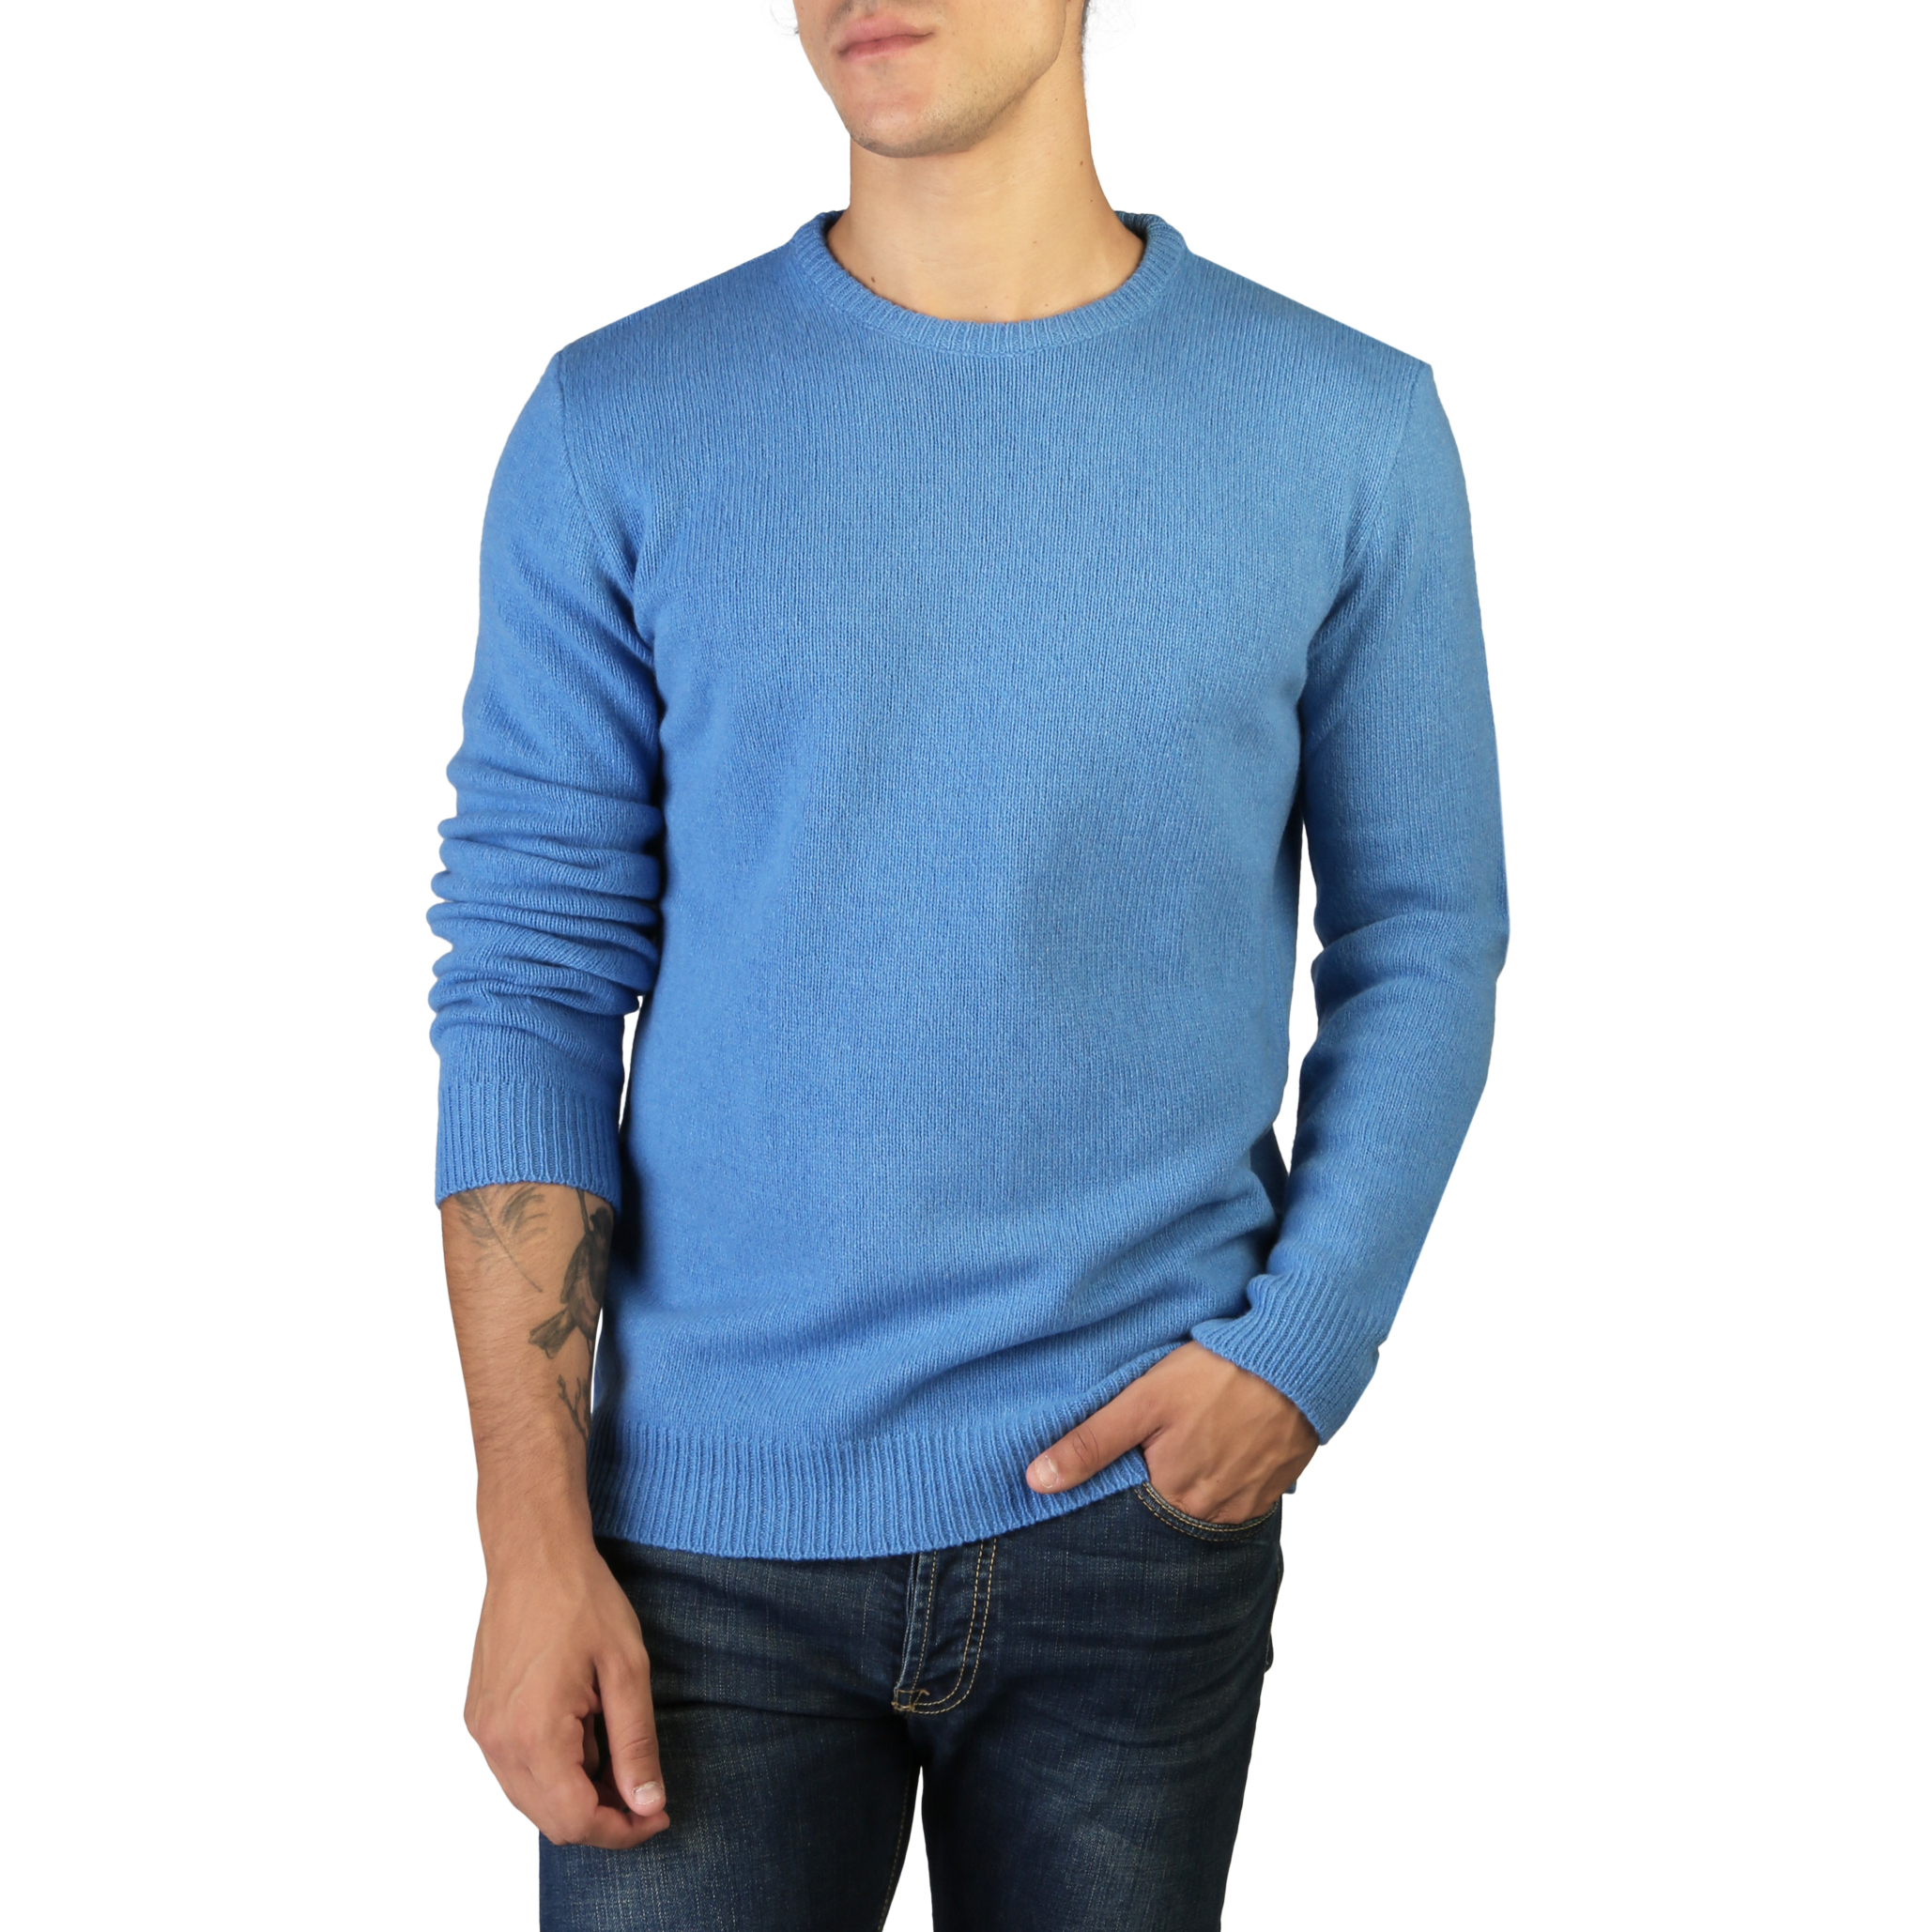 Men's sweater 100% Cashmere C-NECK